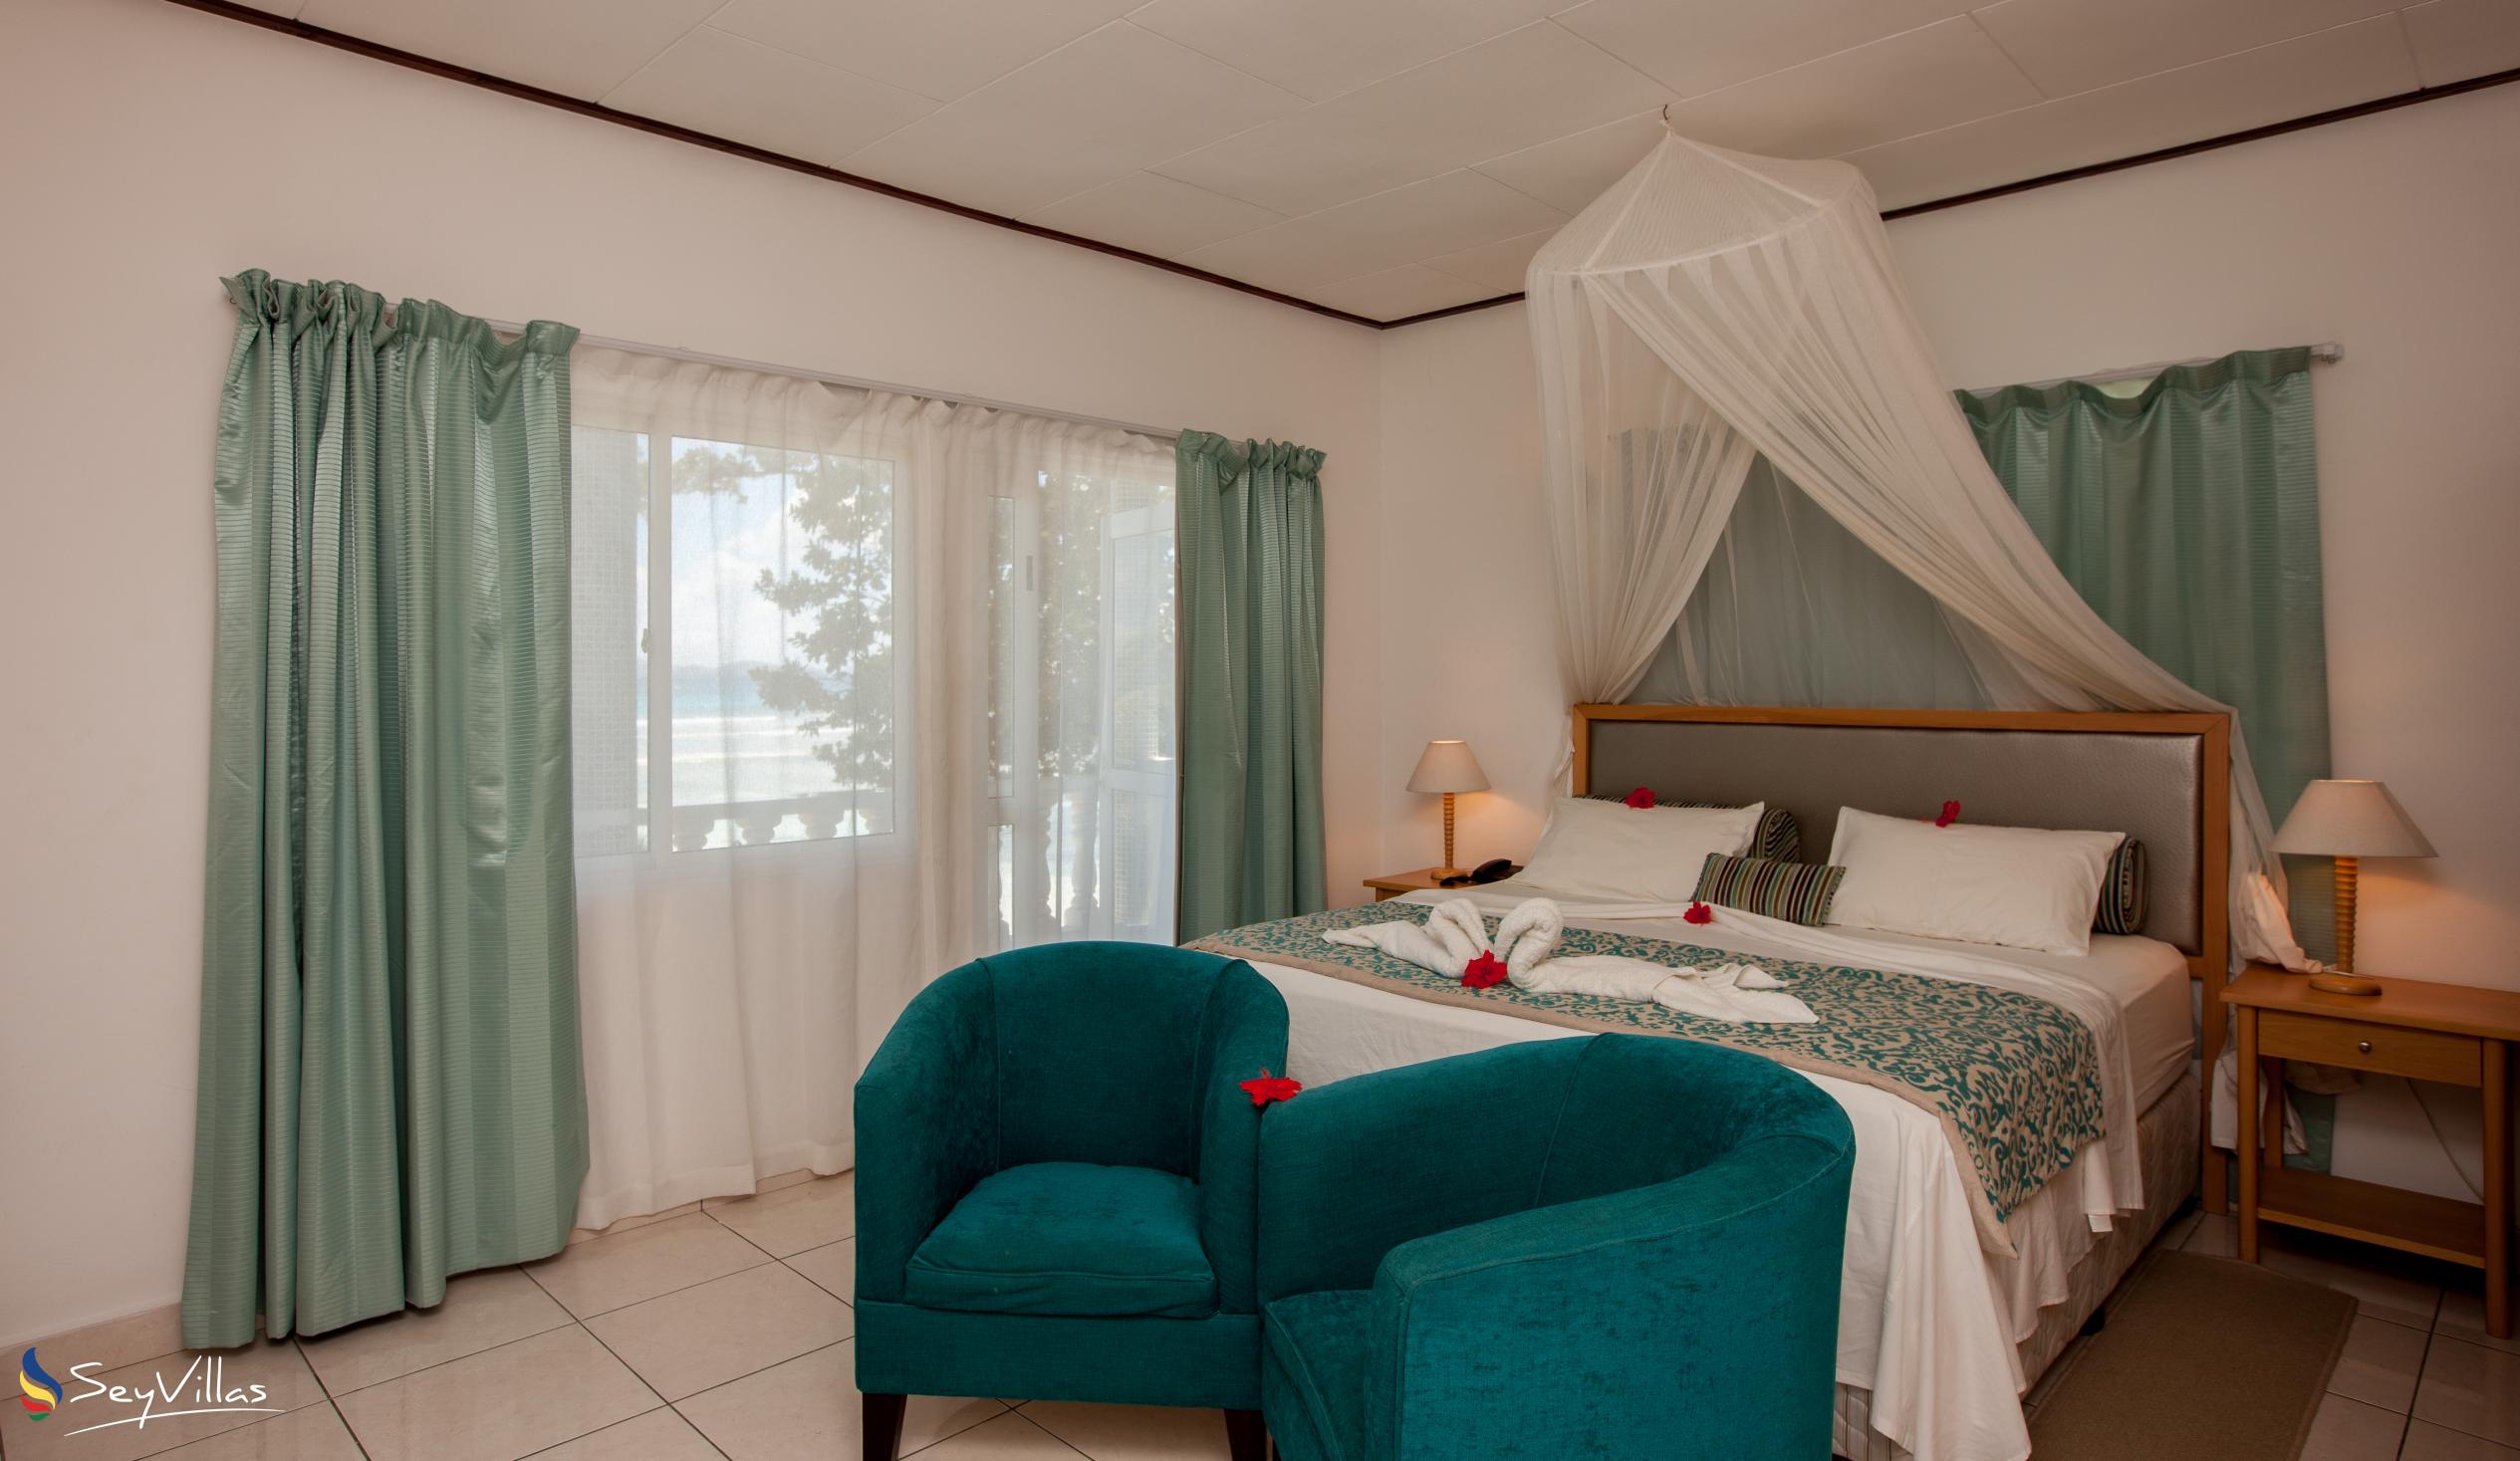 Photo 48: Moonlight Beach Villa - Standard Room Mountain View - La Digue (Seychelles)